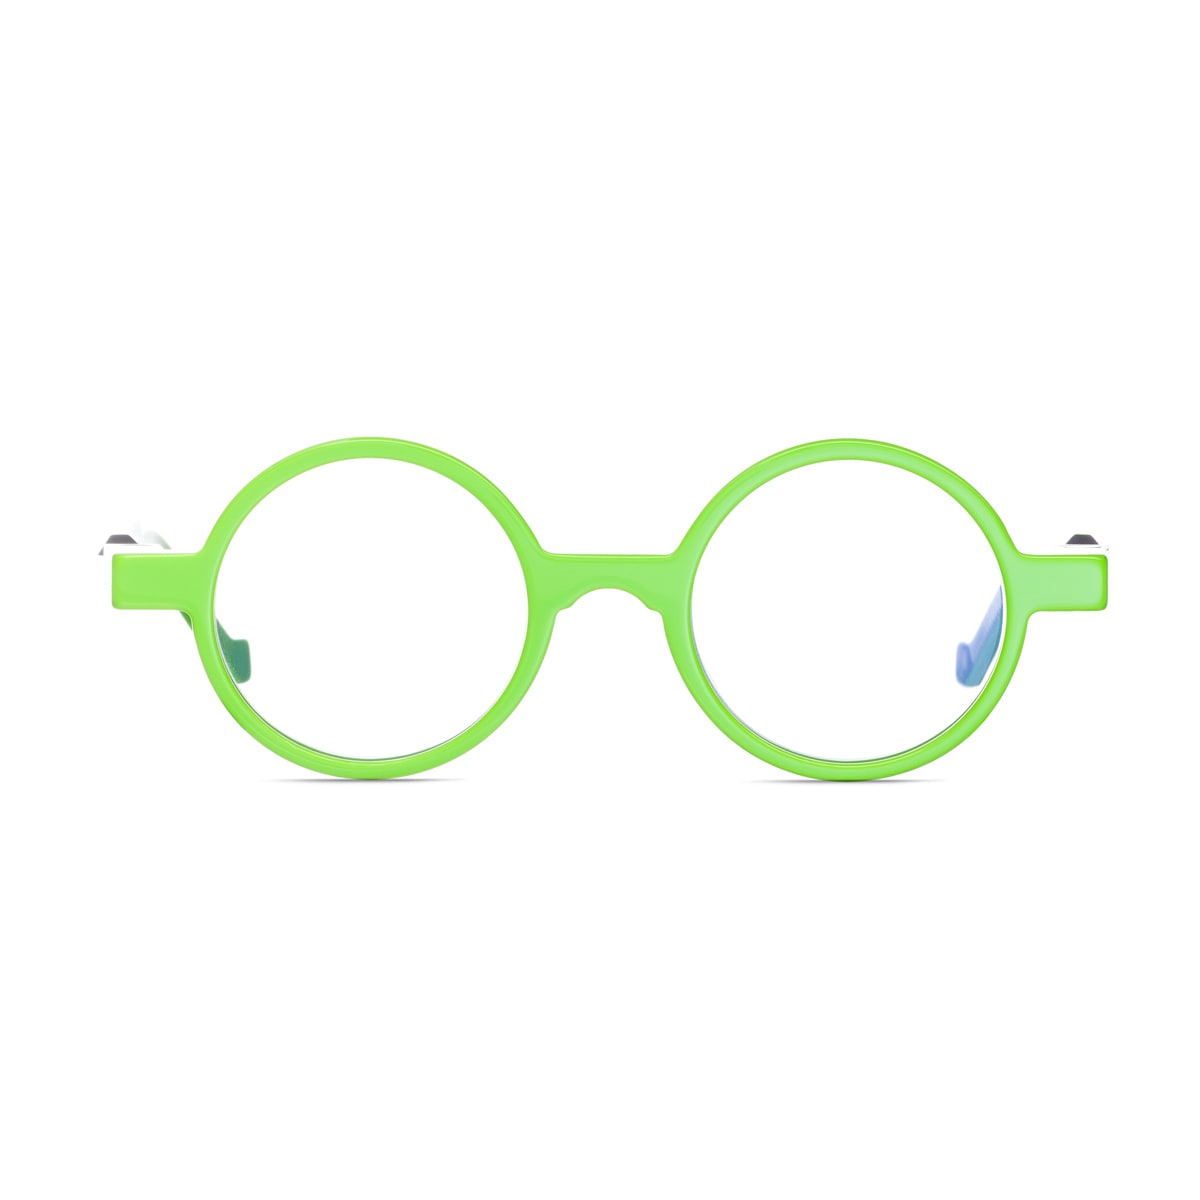 Wl0008 White Label Acid Green Glasses